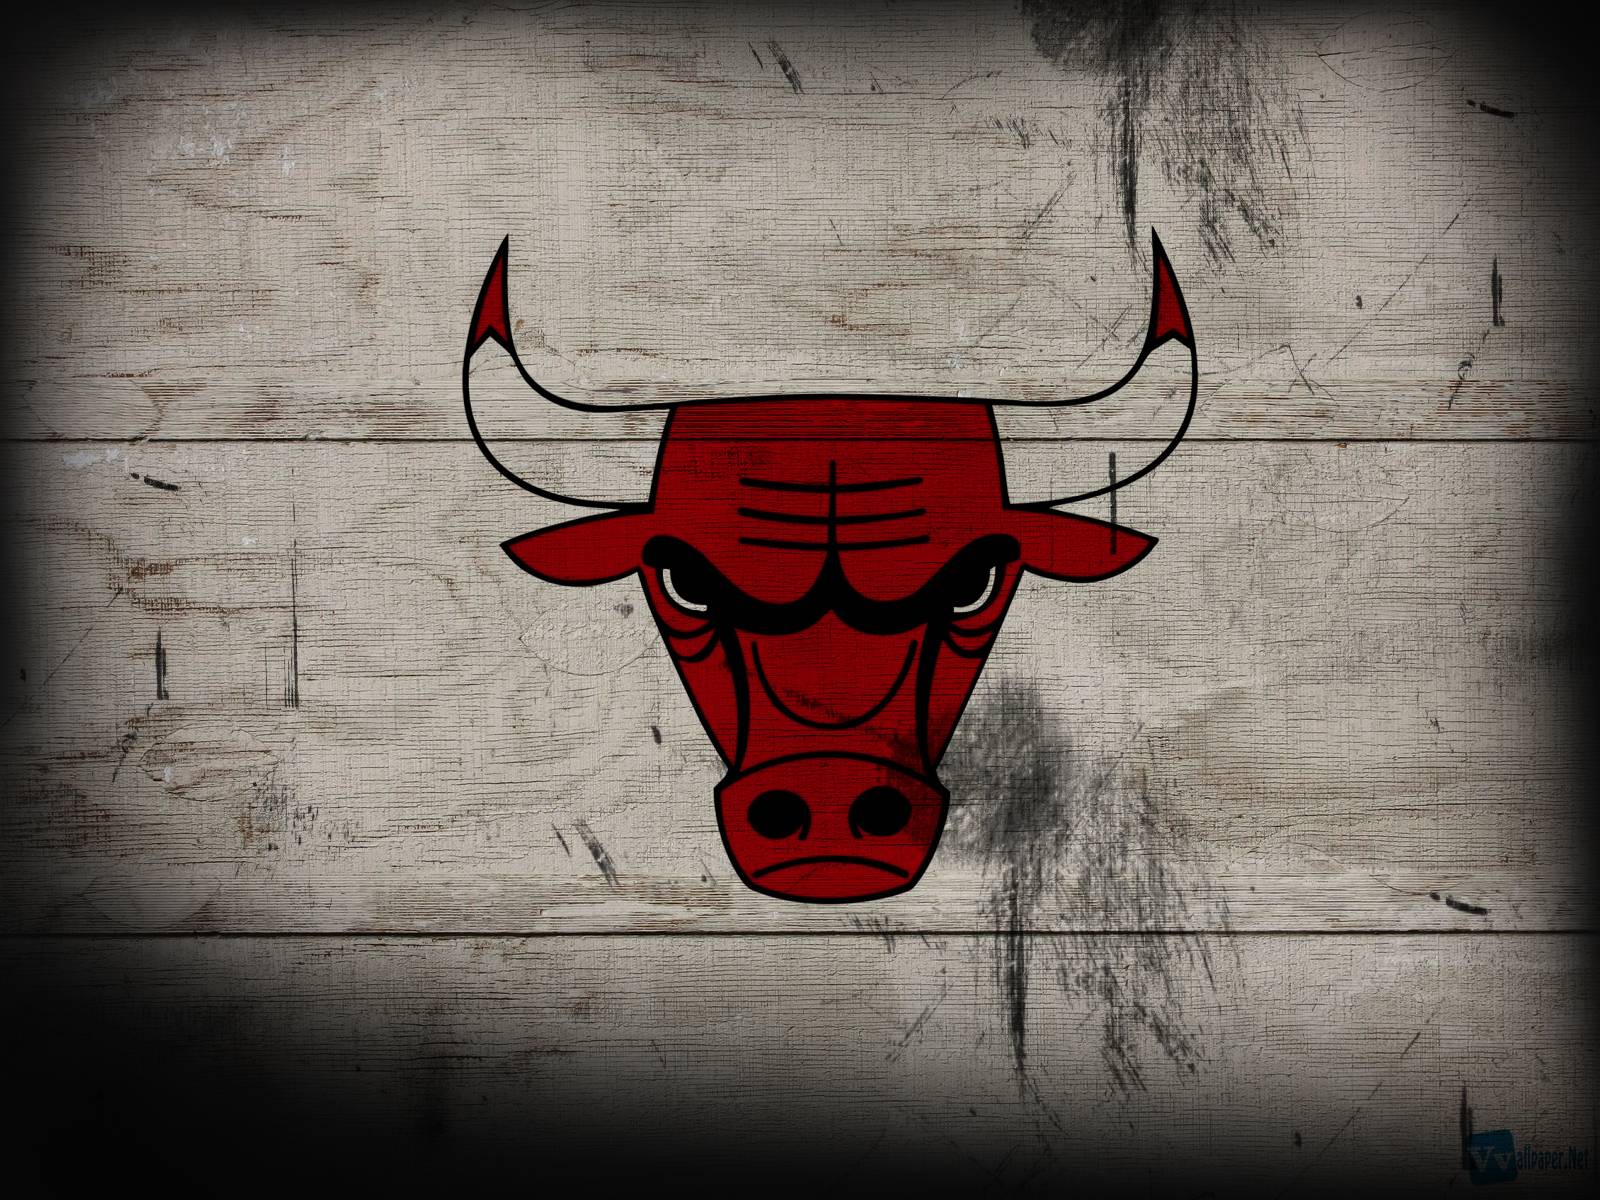 Chicago Bulls Wallpaper X